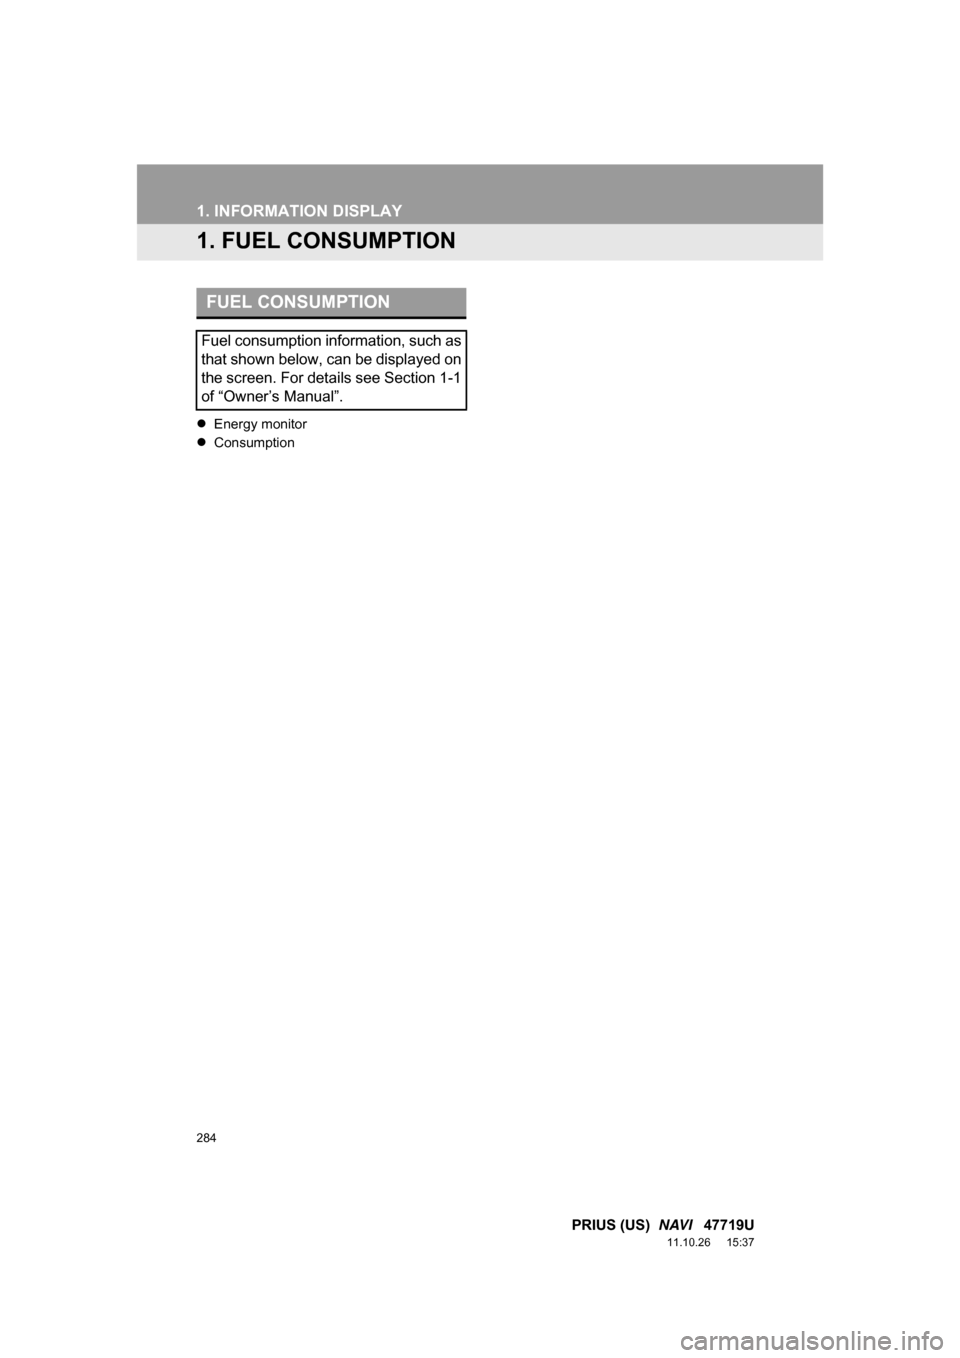 TOYOTA PRIUS 2012 3.G Navigation Manual 284
PRIUS (US)  NAVI   47719U
11.10.26     15:37
1. INFORMATION DISPLAY
1. FUEL CONSUMPTION
 Energy monitor
  Consumption
FUEL CONSUMPTION
Fuel consumption information, such as
that shown below,